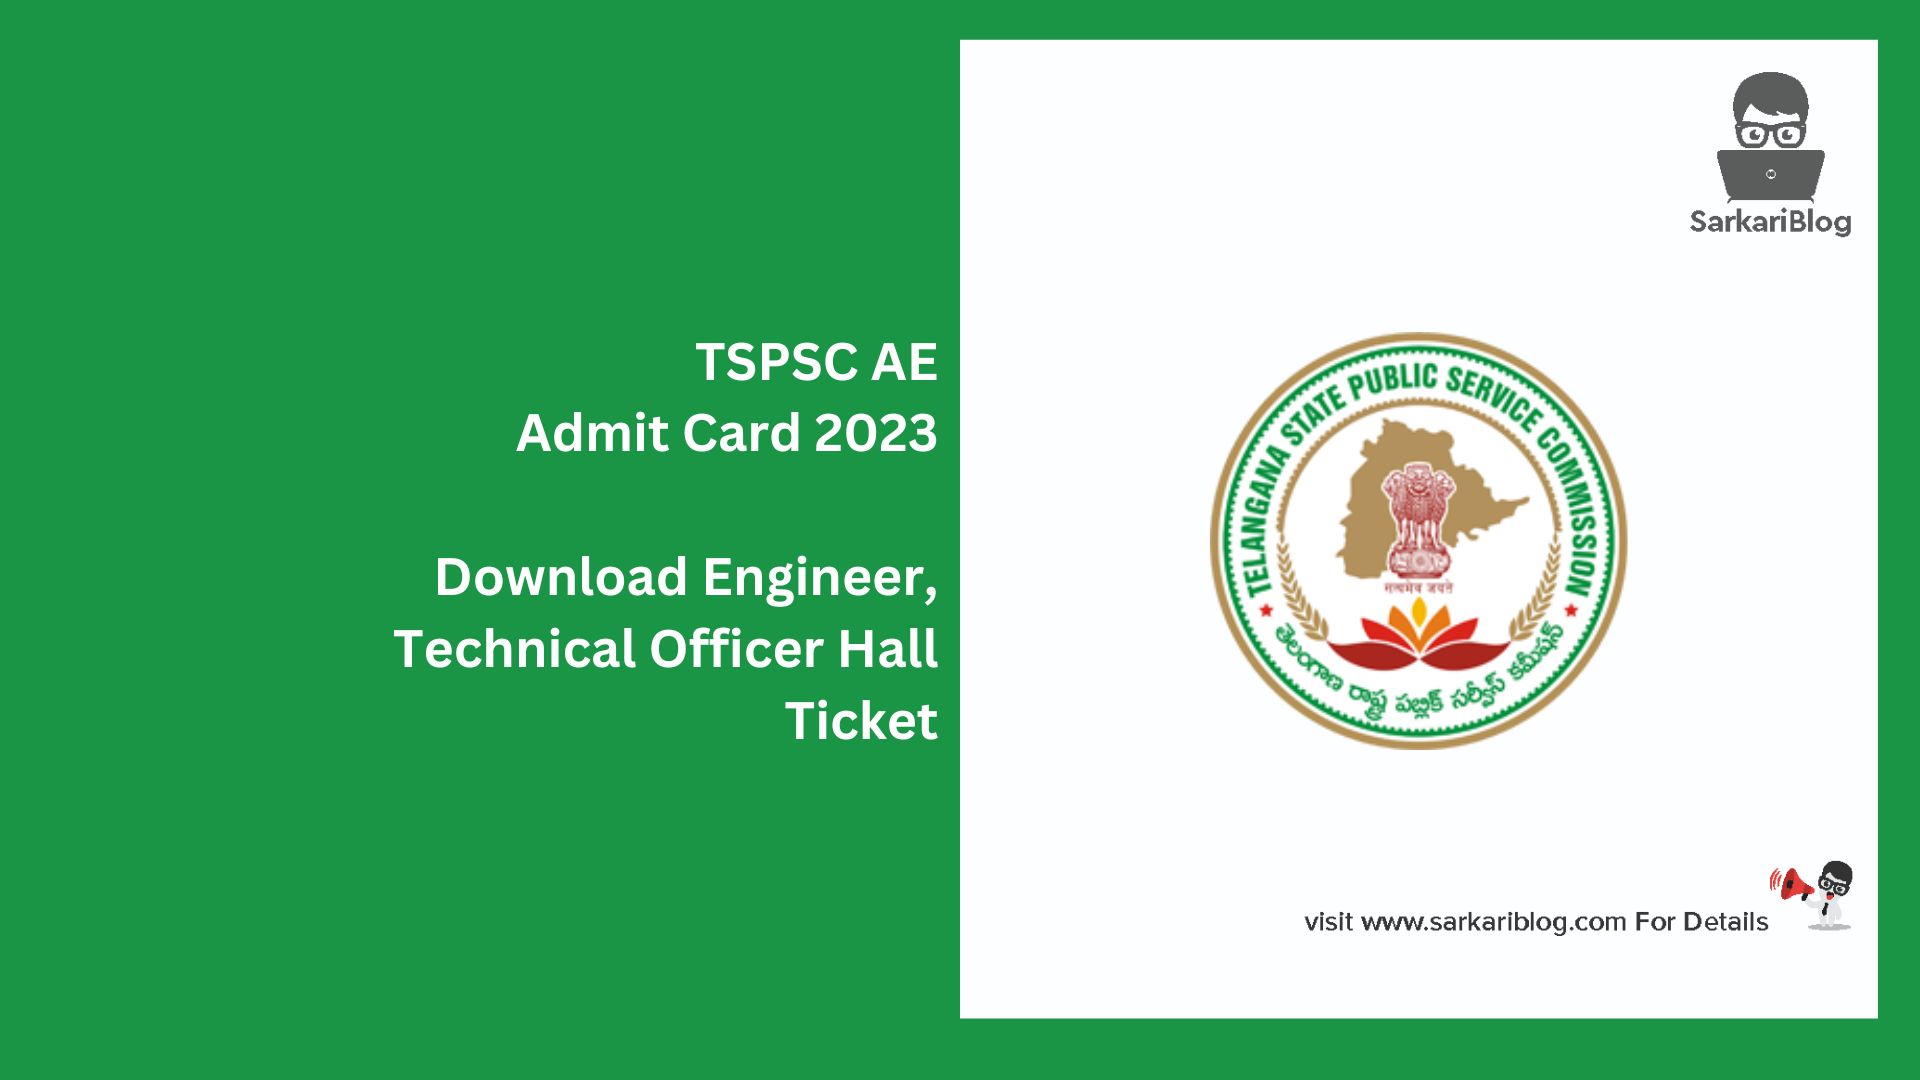 TSPSC AE Admit Card 2023